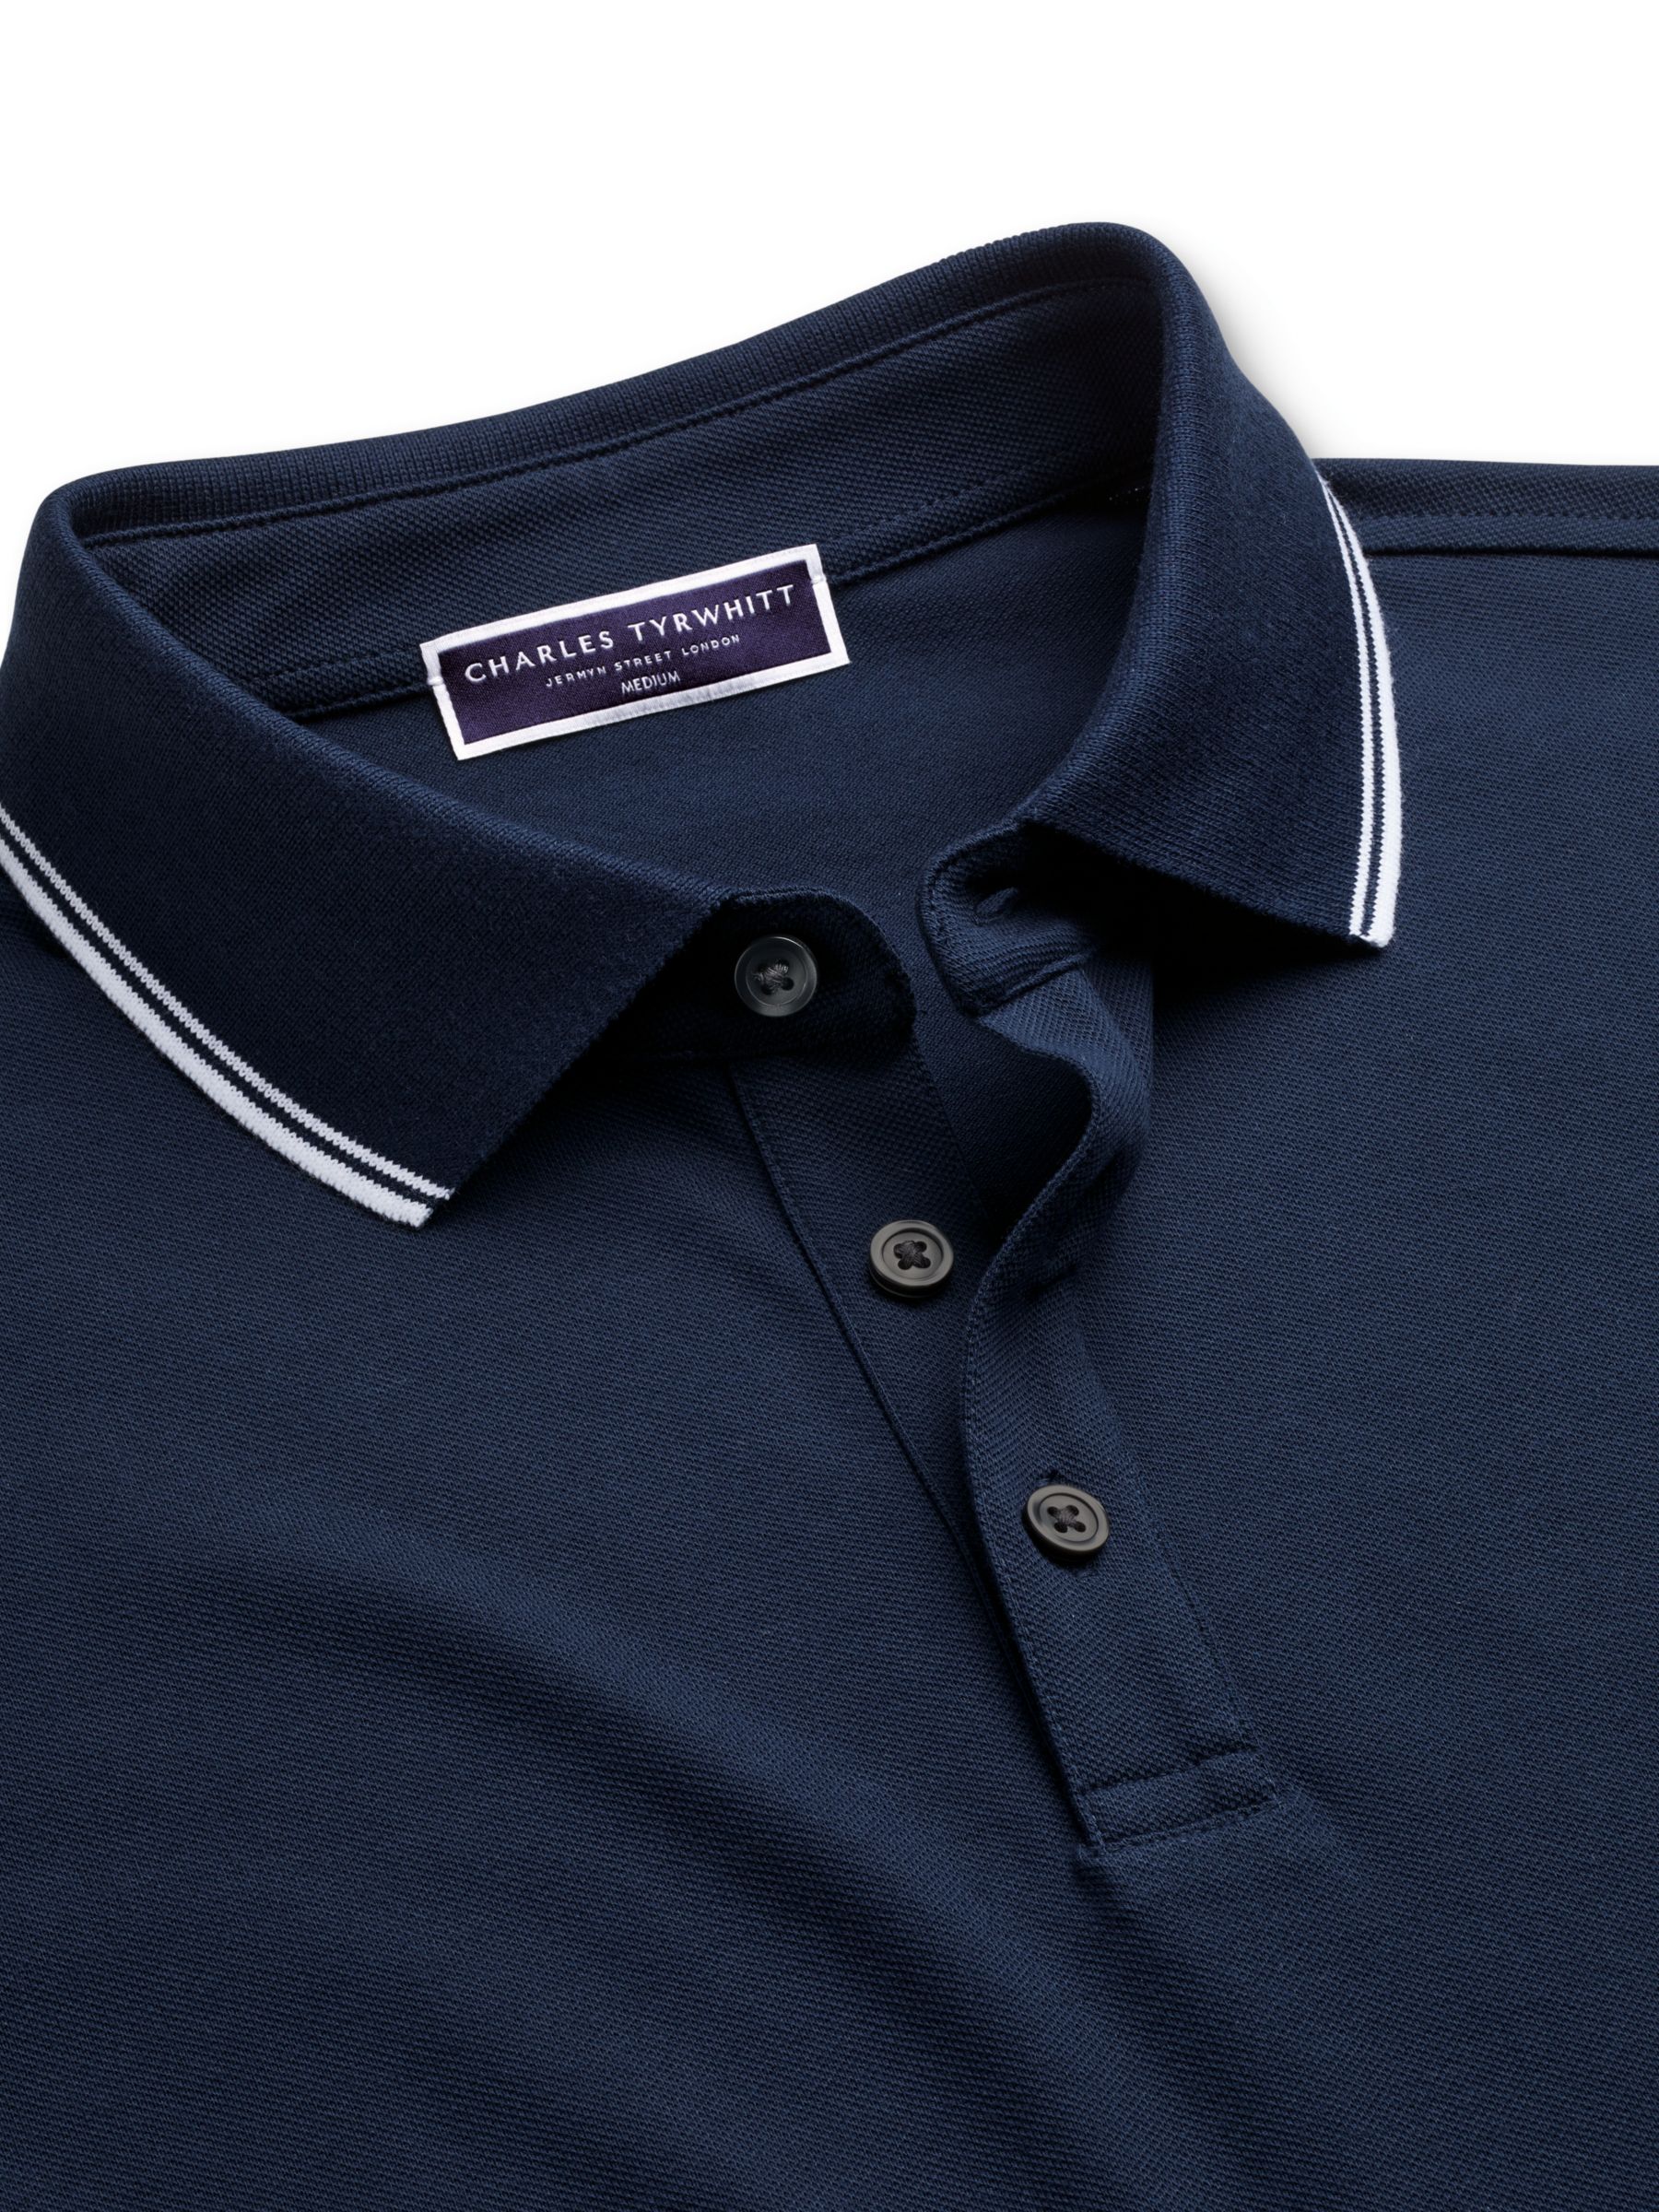 Charles Tyrwhitt Contrast Tipping Short Sleeve Polo Shirt, Navy, M